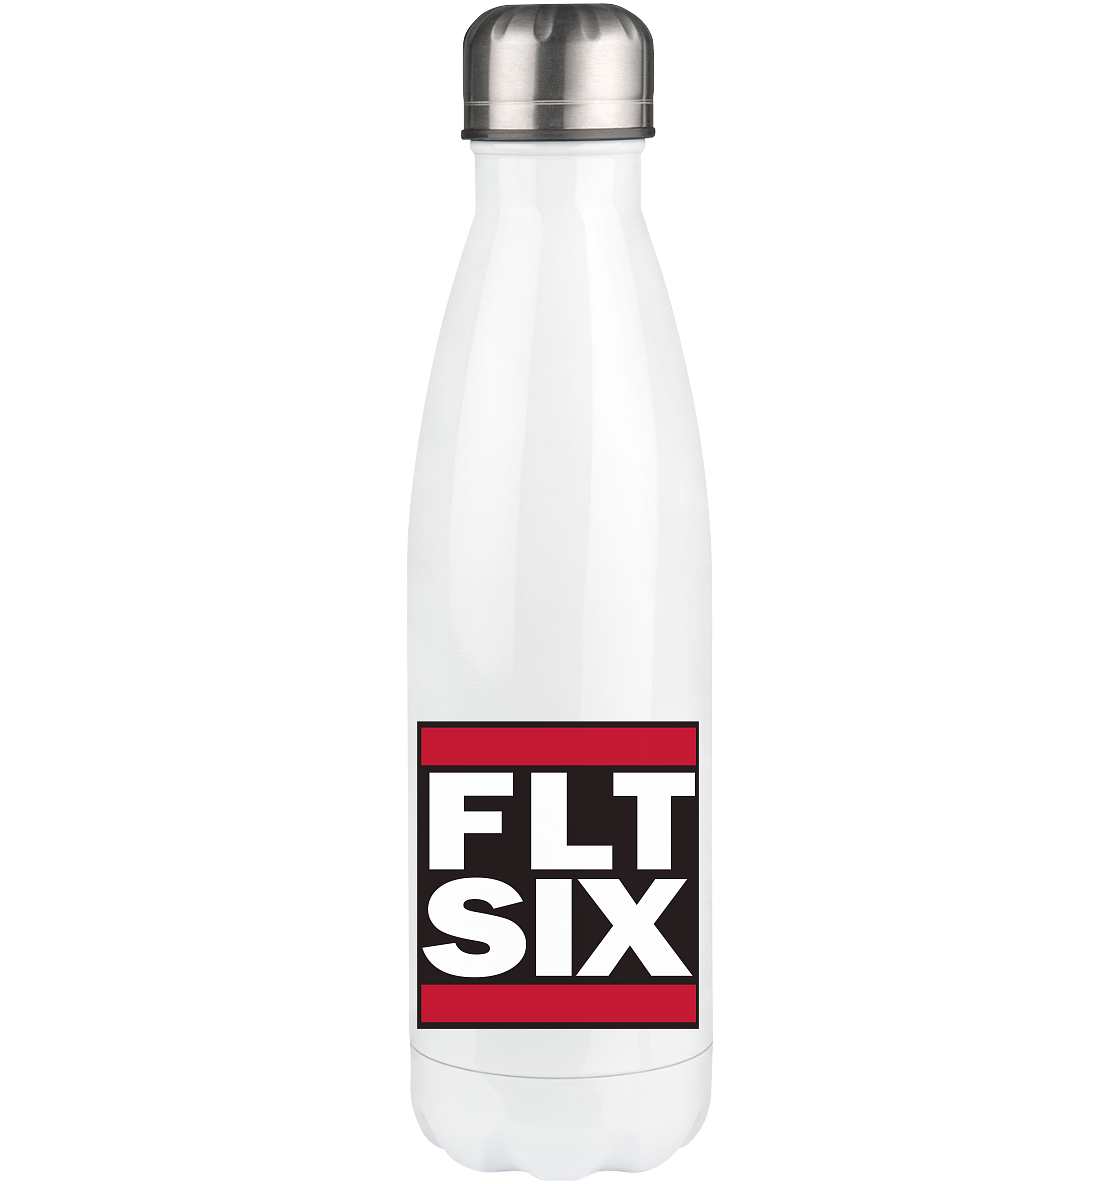 FLT SIX  - Thermoflasche 500ml